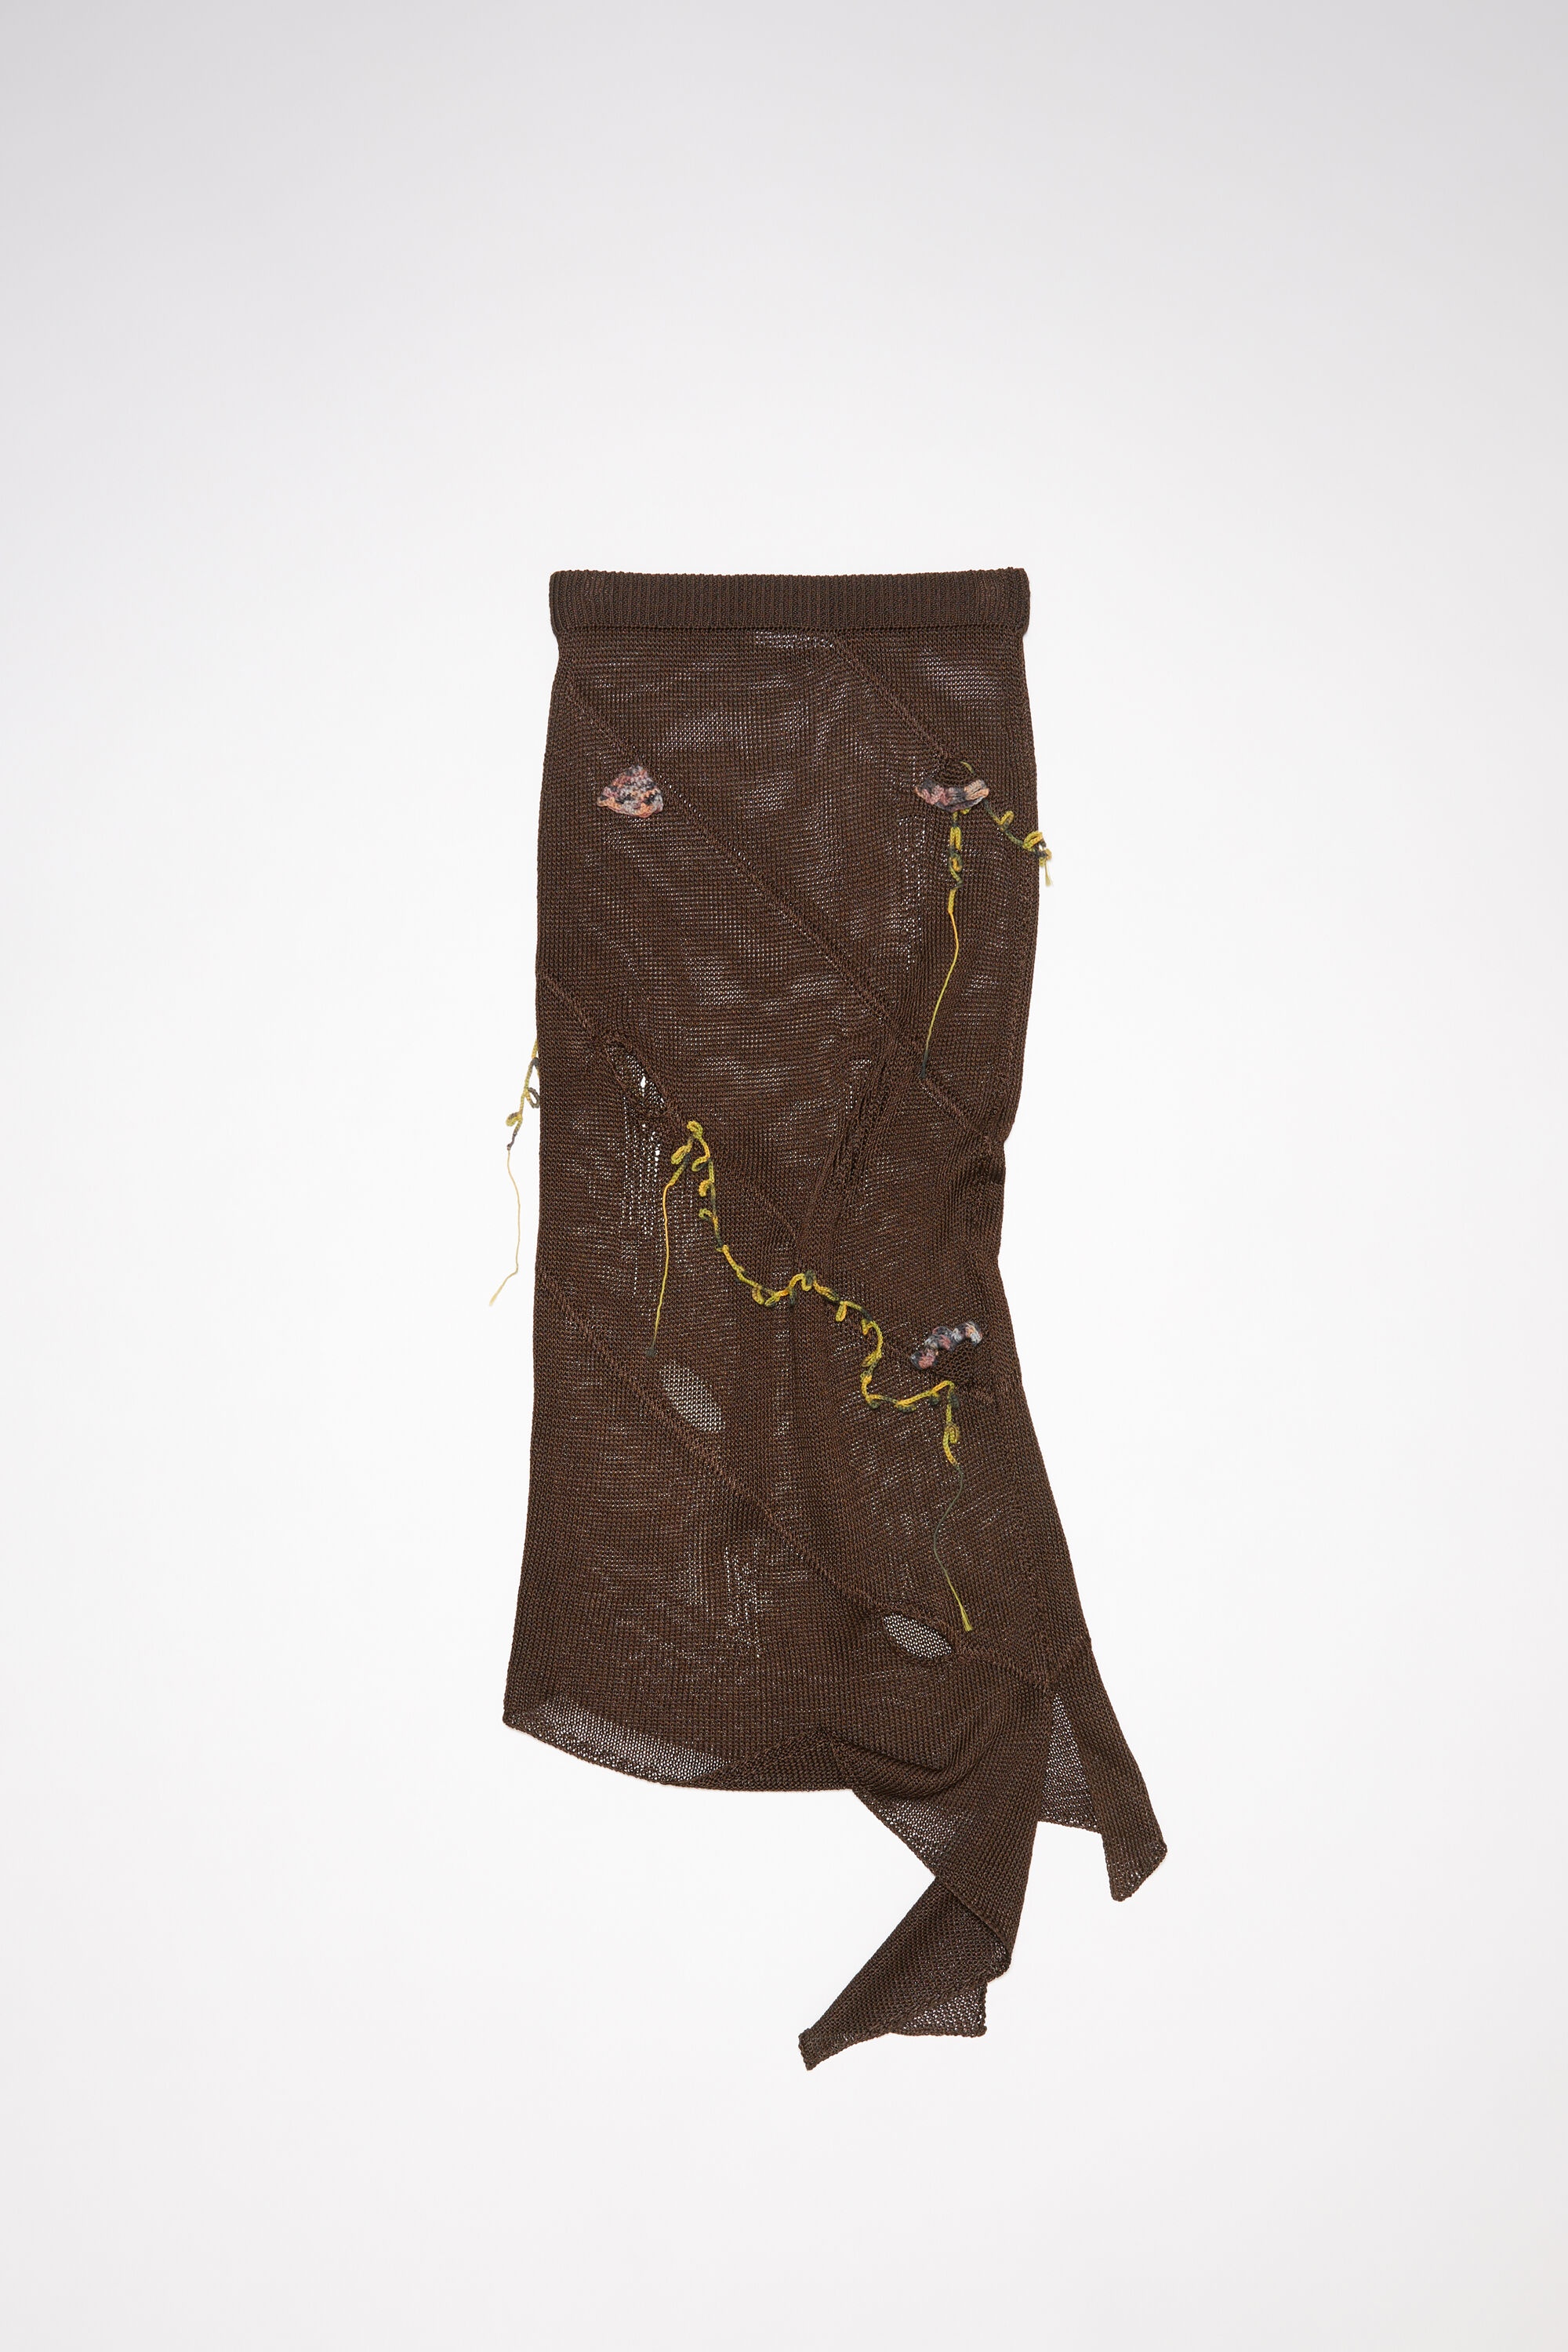 Crochet flower skirt - Chocolate brown - 6